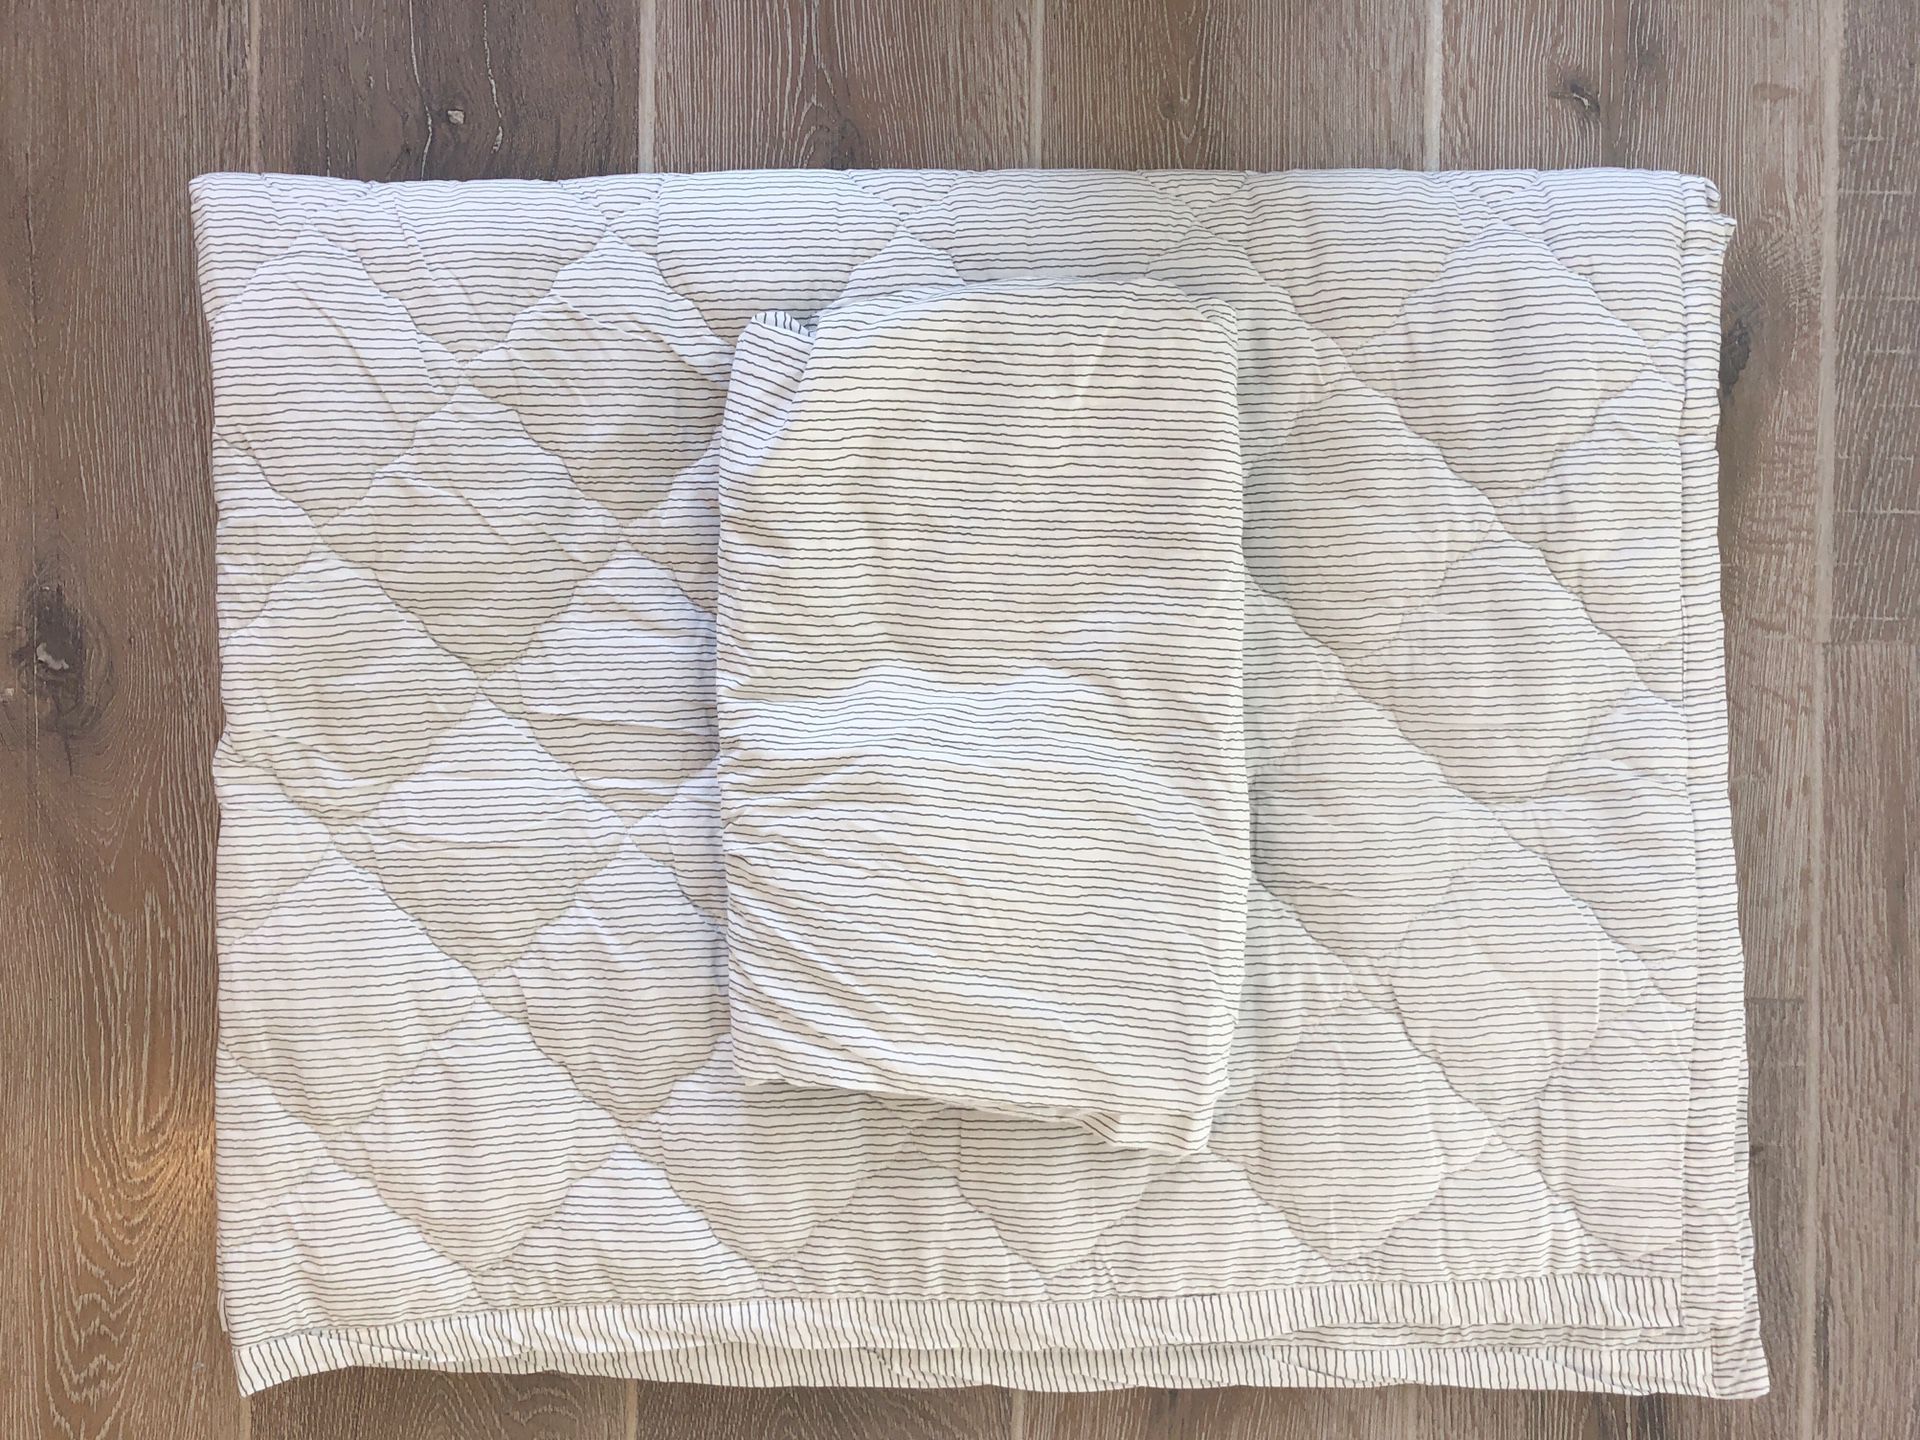 Baby organic crib sheet and matching blanket